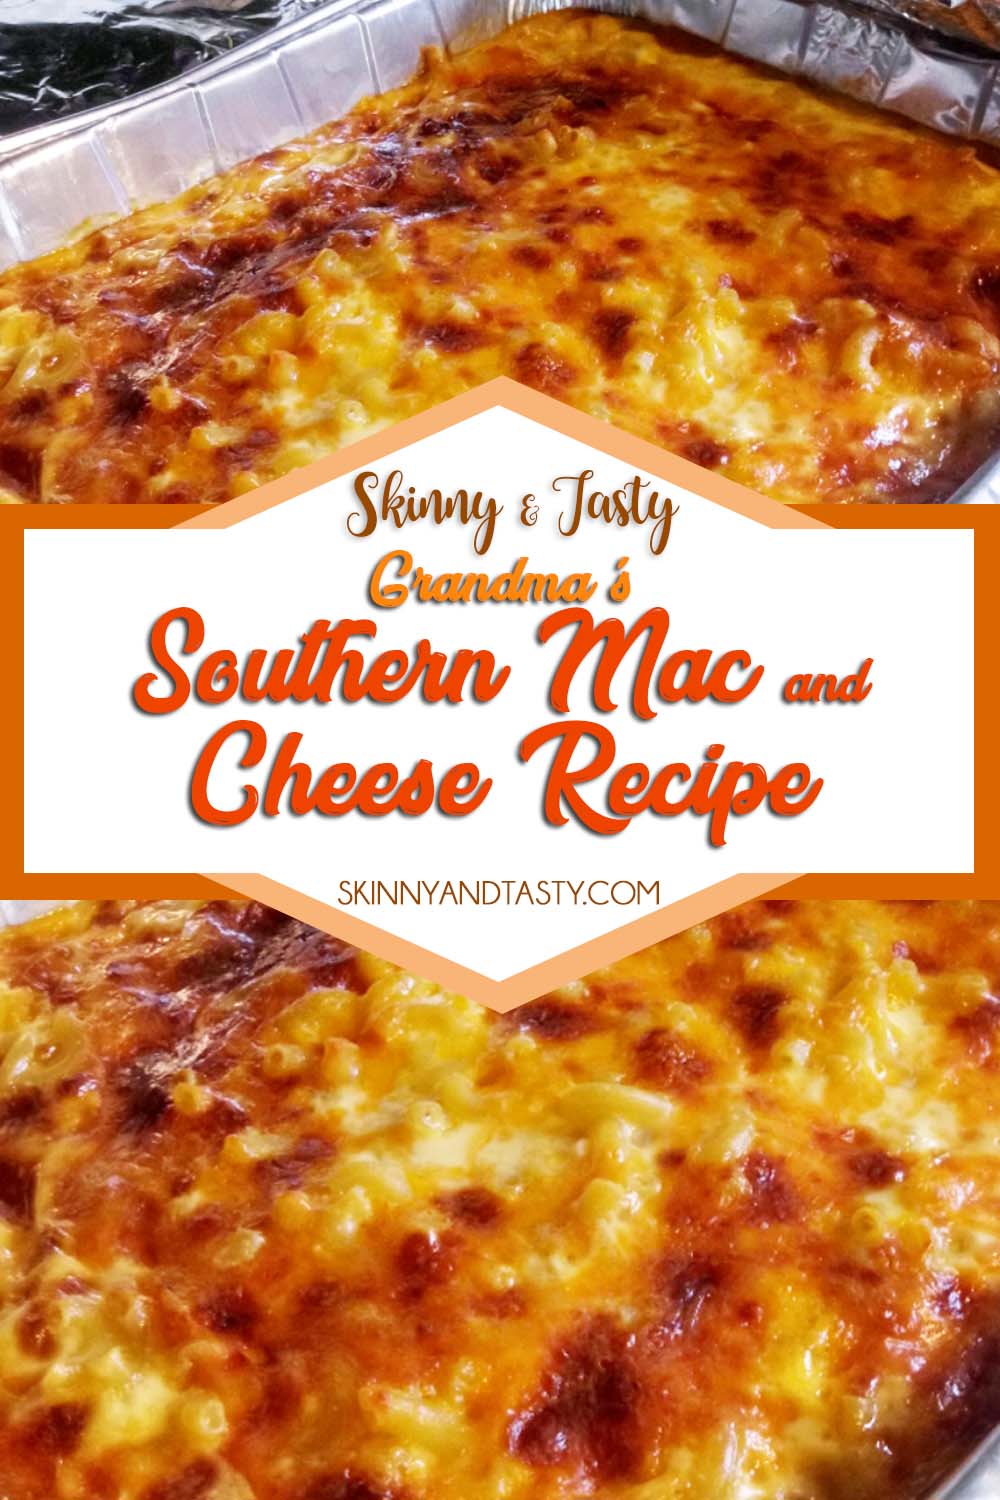 Grandma's Southern Mac and Cheese Recipe